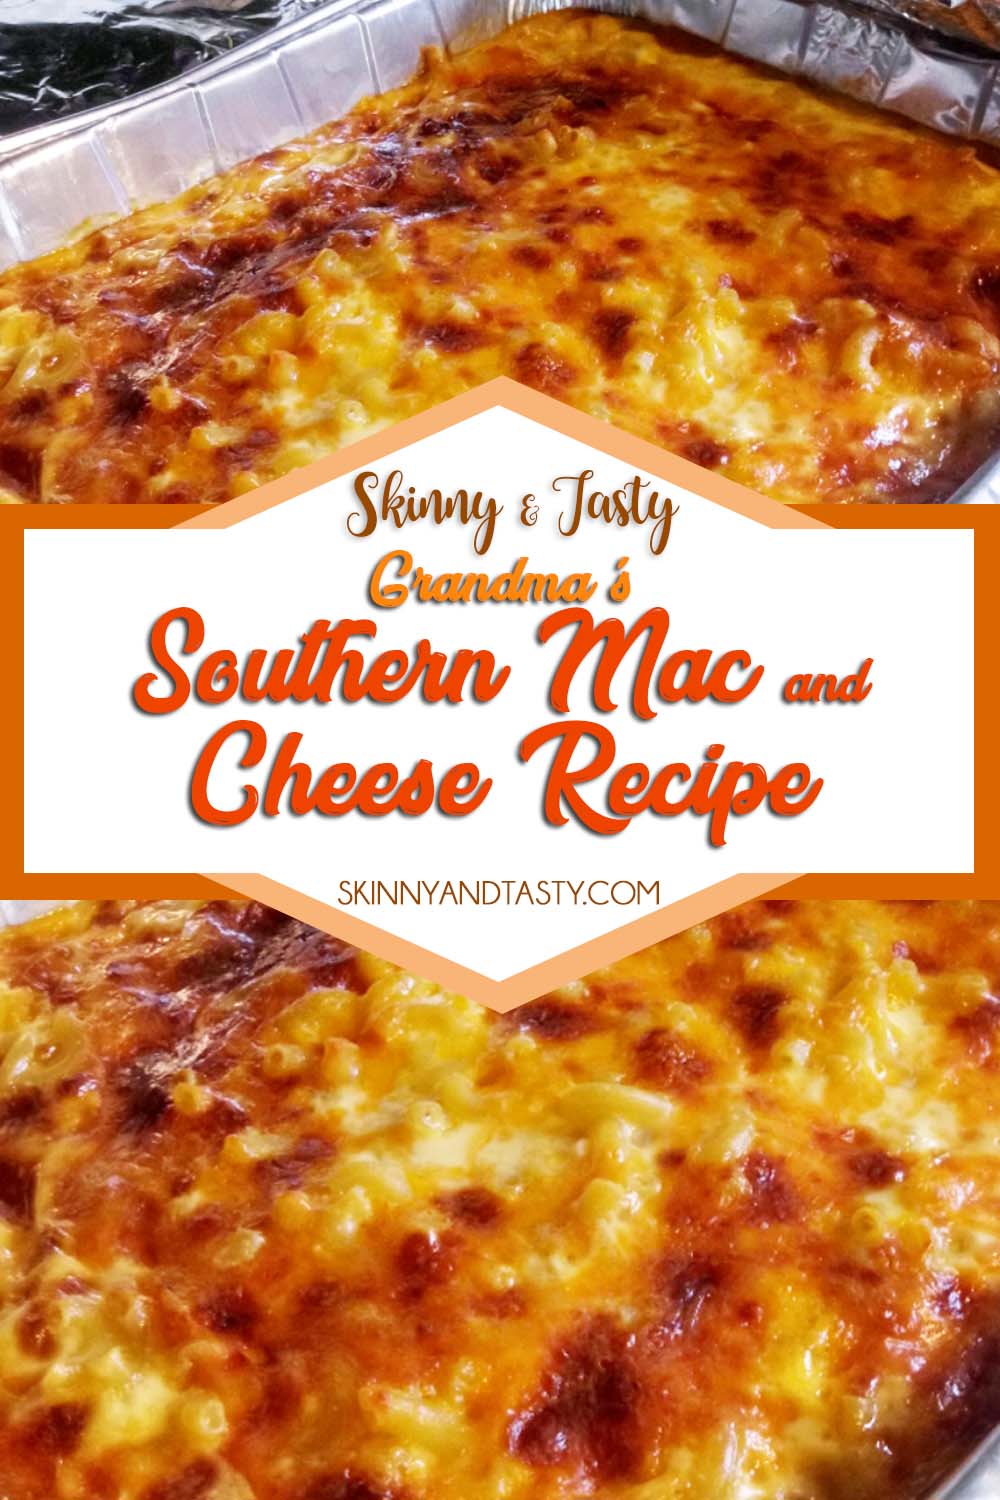 Grandma's Southern Mac and Cheese Recipe